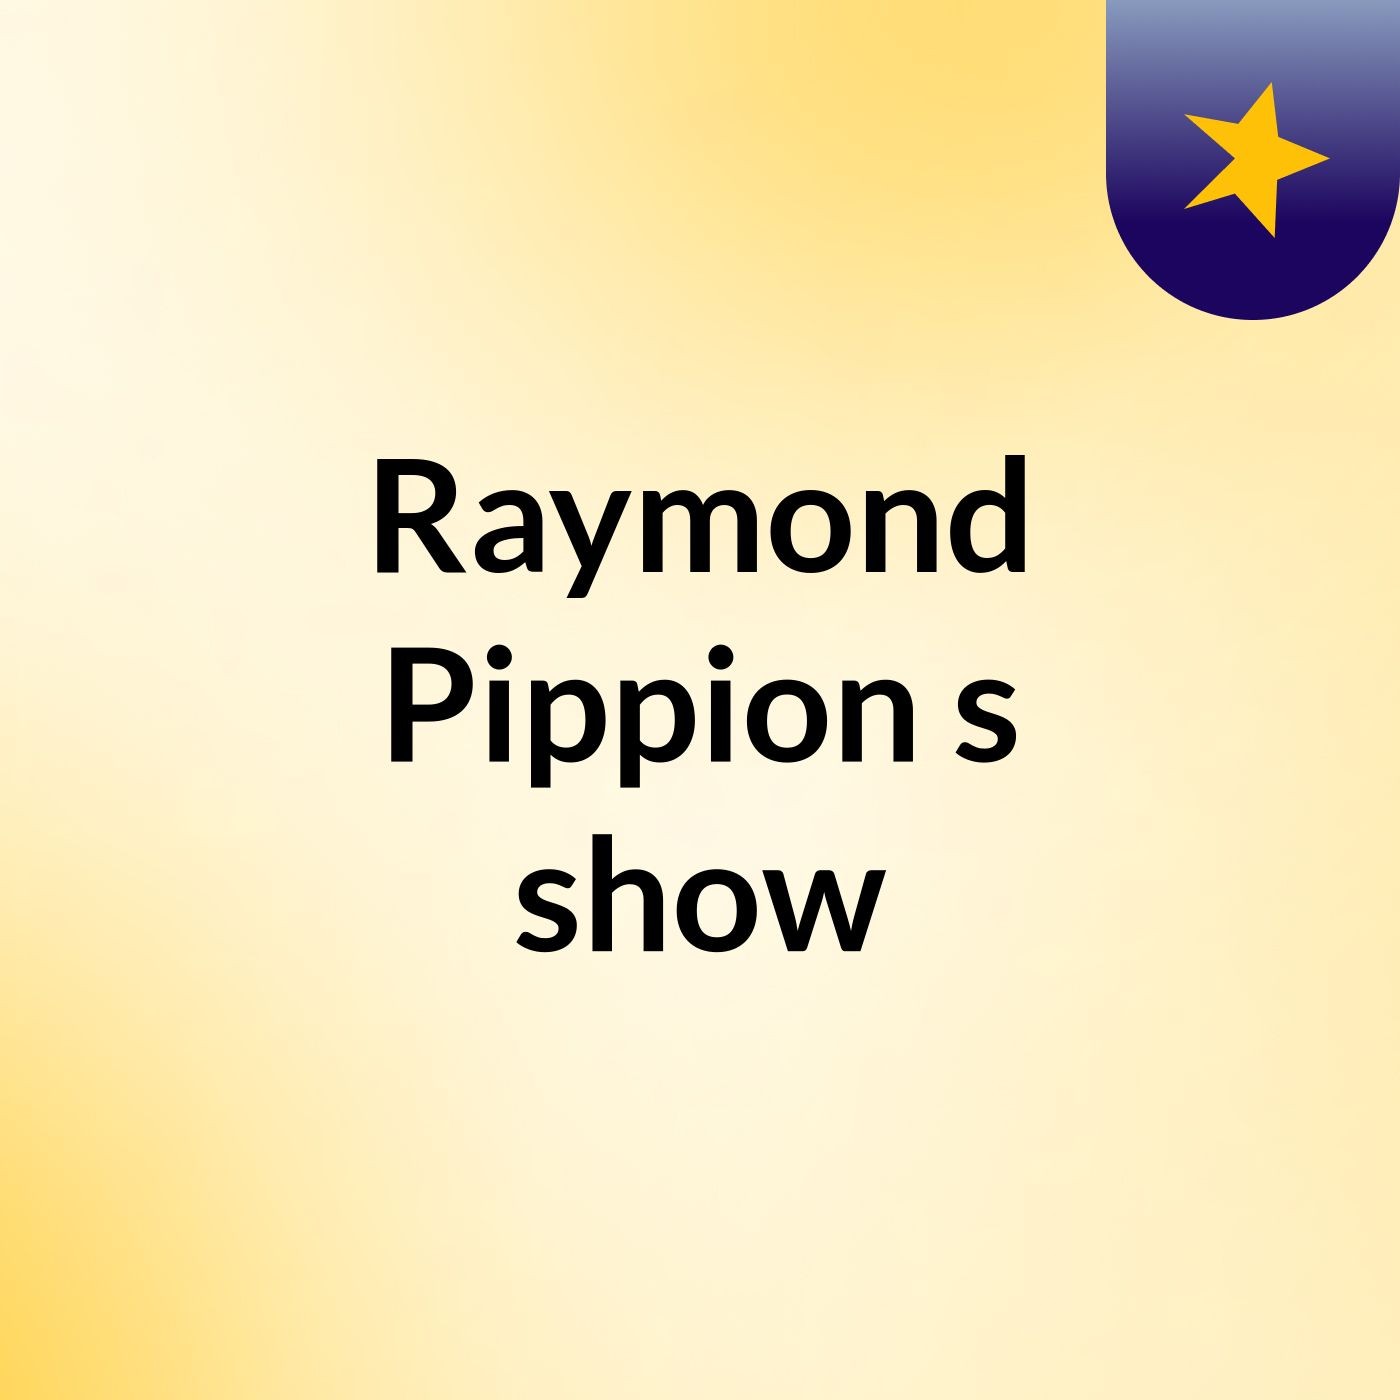 Episode 4 - Raymond Pippion's show